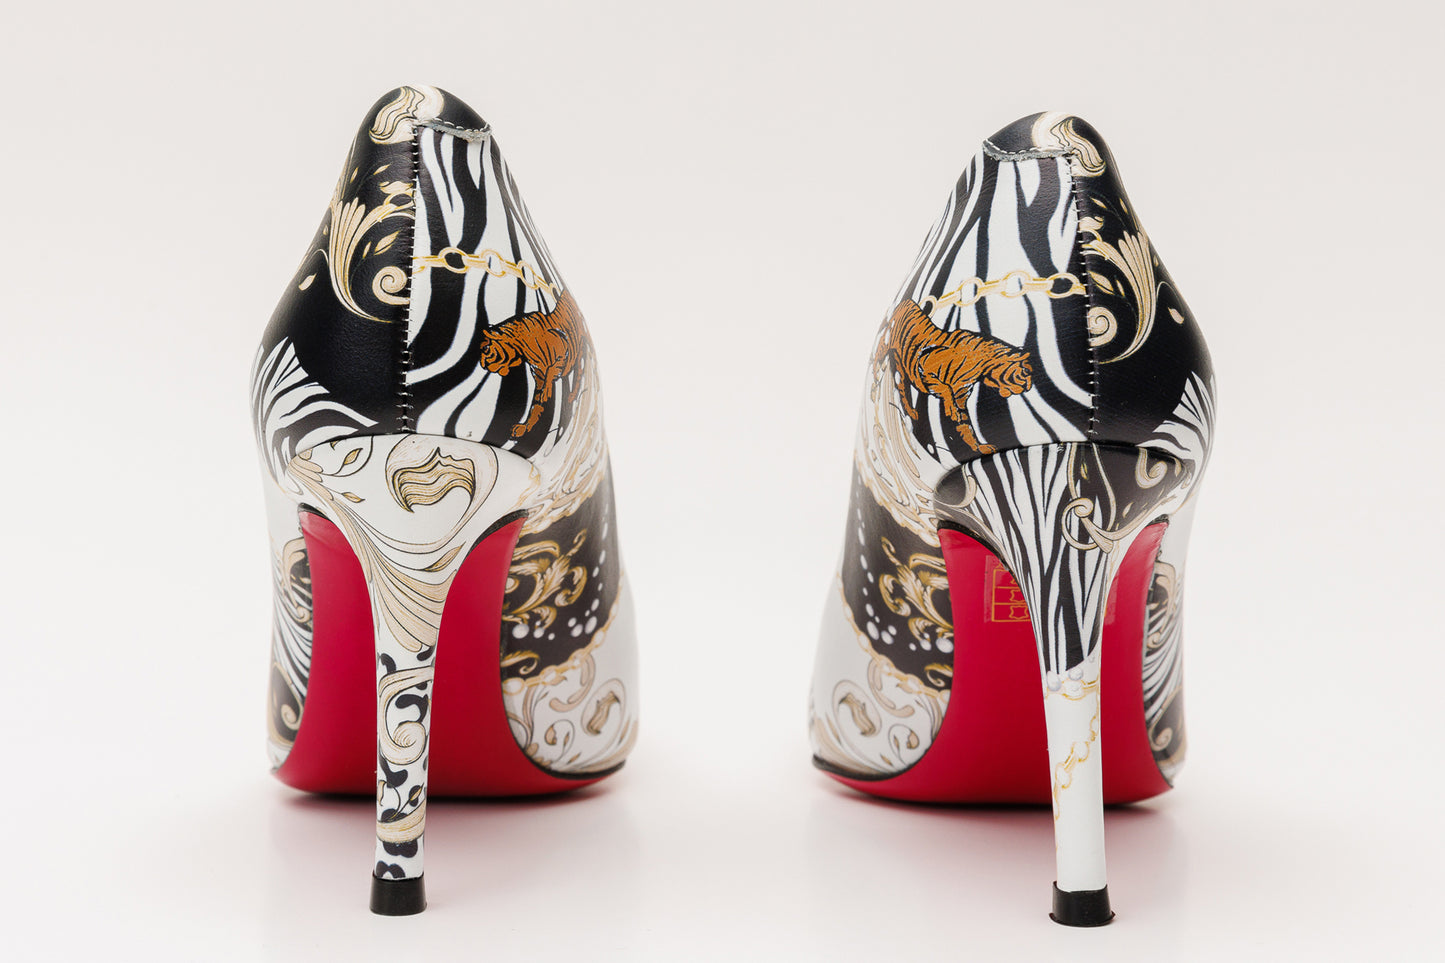 The Perugia White Leather Pump Women Shoe